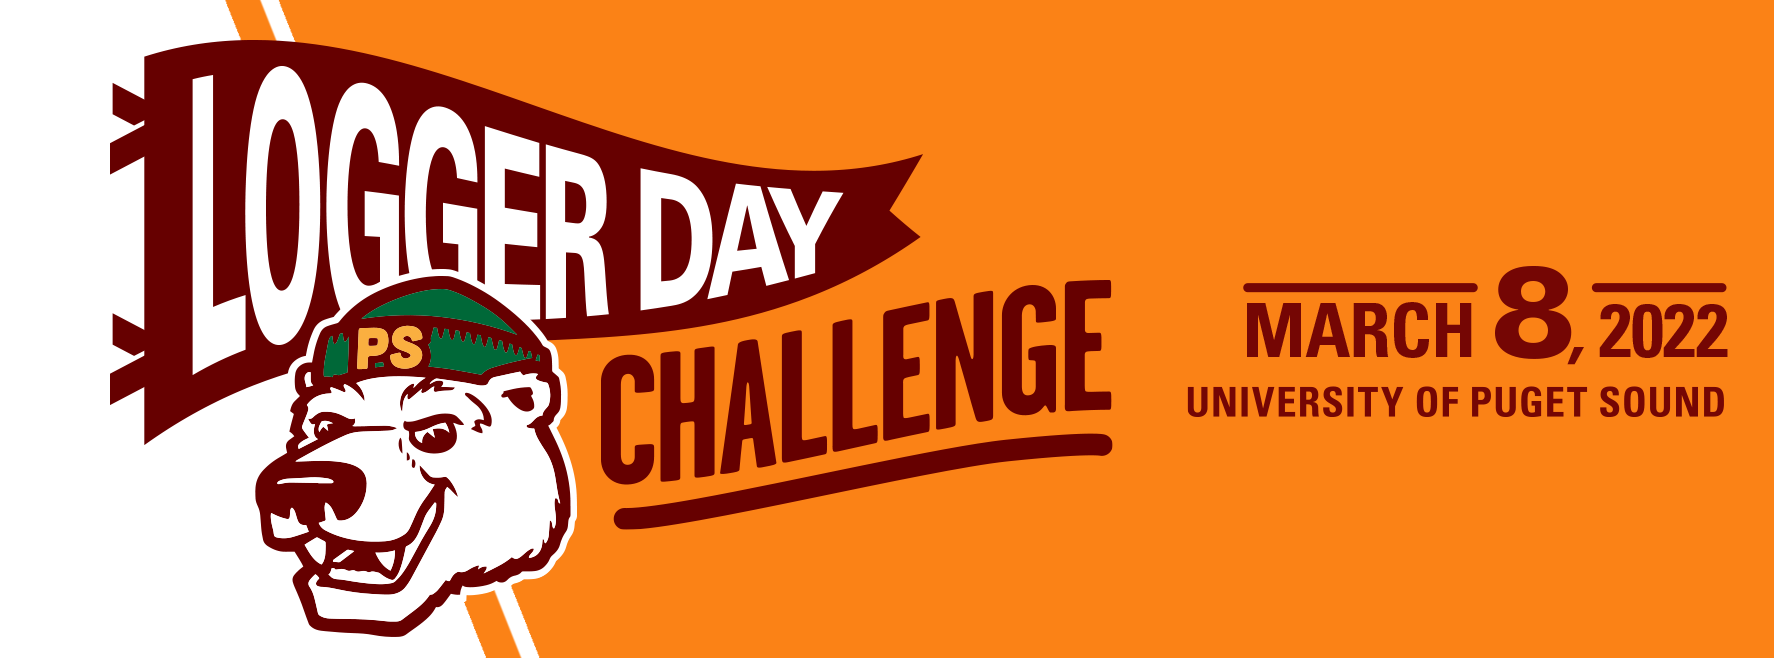 Logger Day Challenge Facebook Cover Artwork